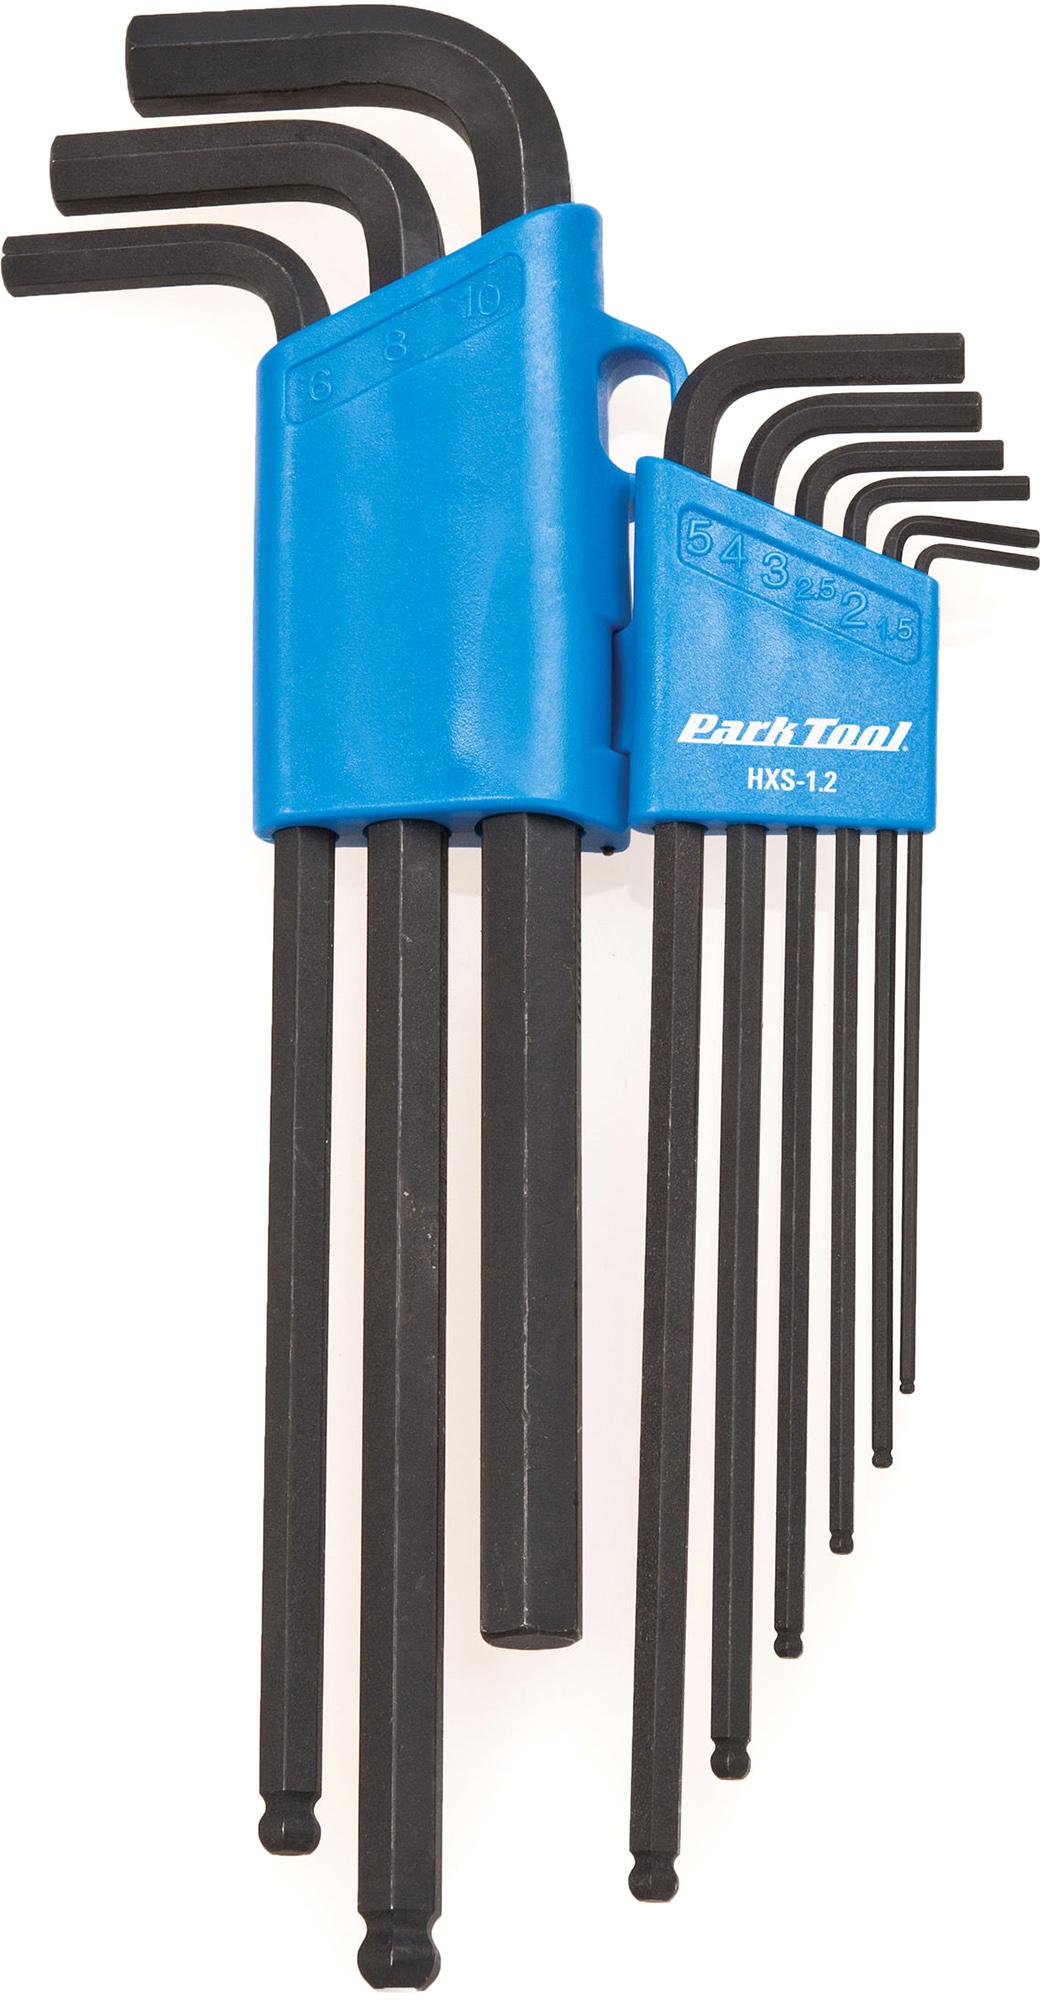 Park Tool Professional Hex Wrench Set Hxs-1 - Black